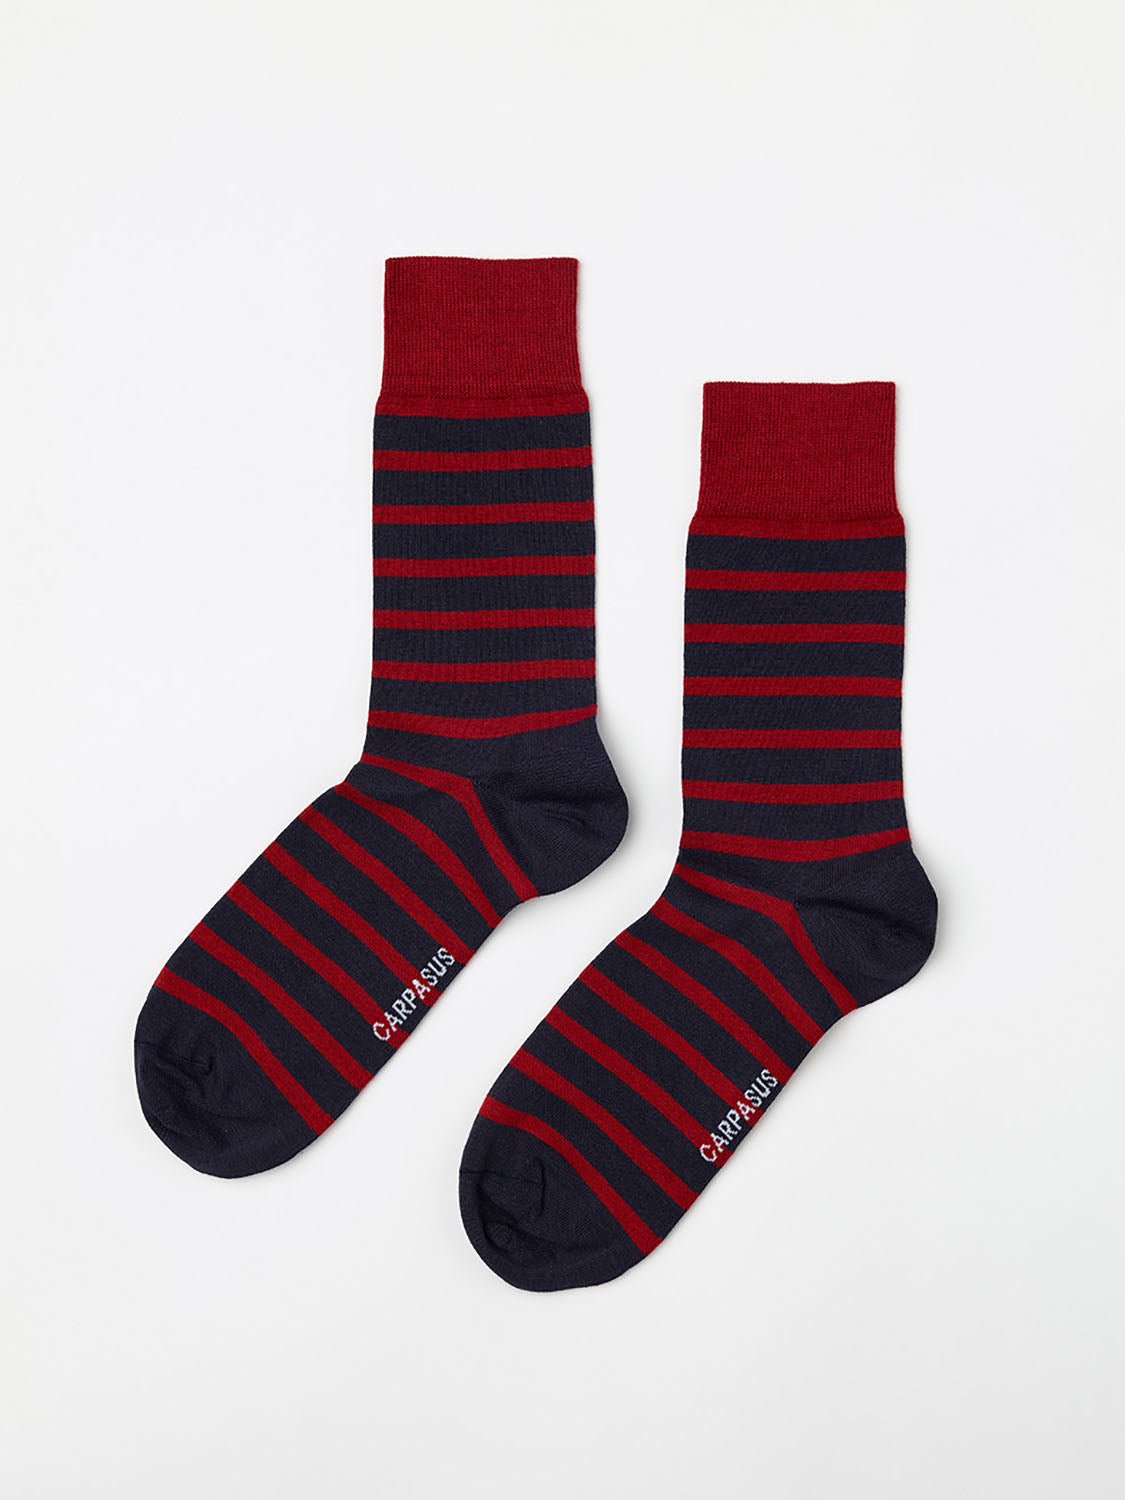 Classy Socken Streifen Navy/Bordeaux